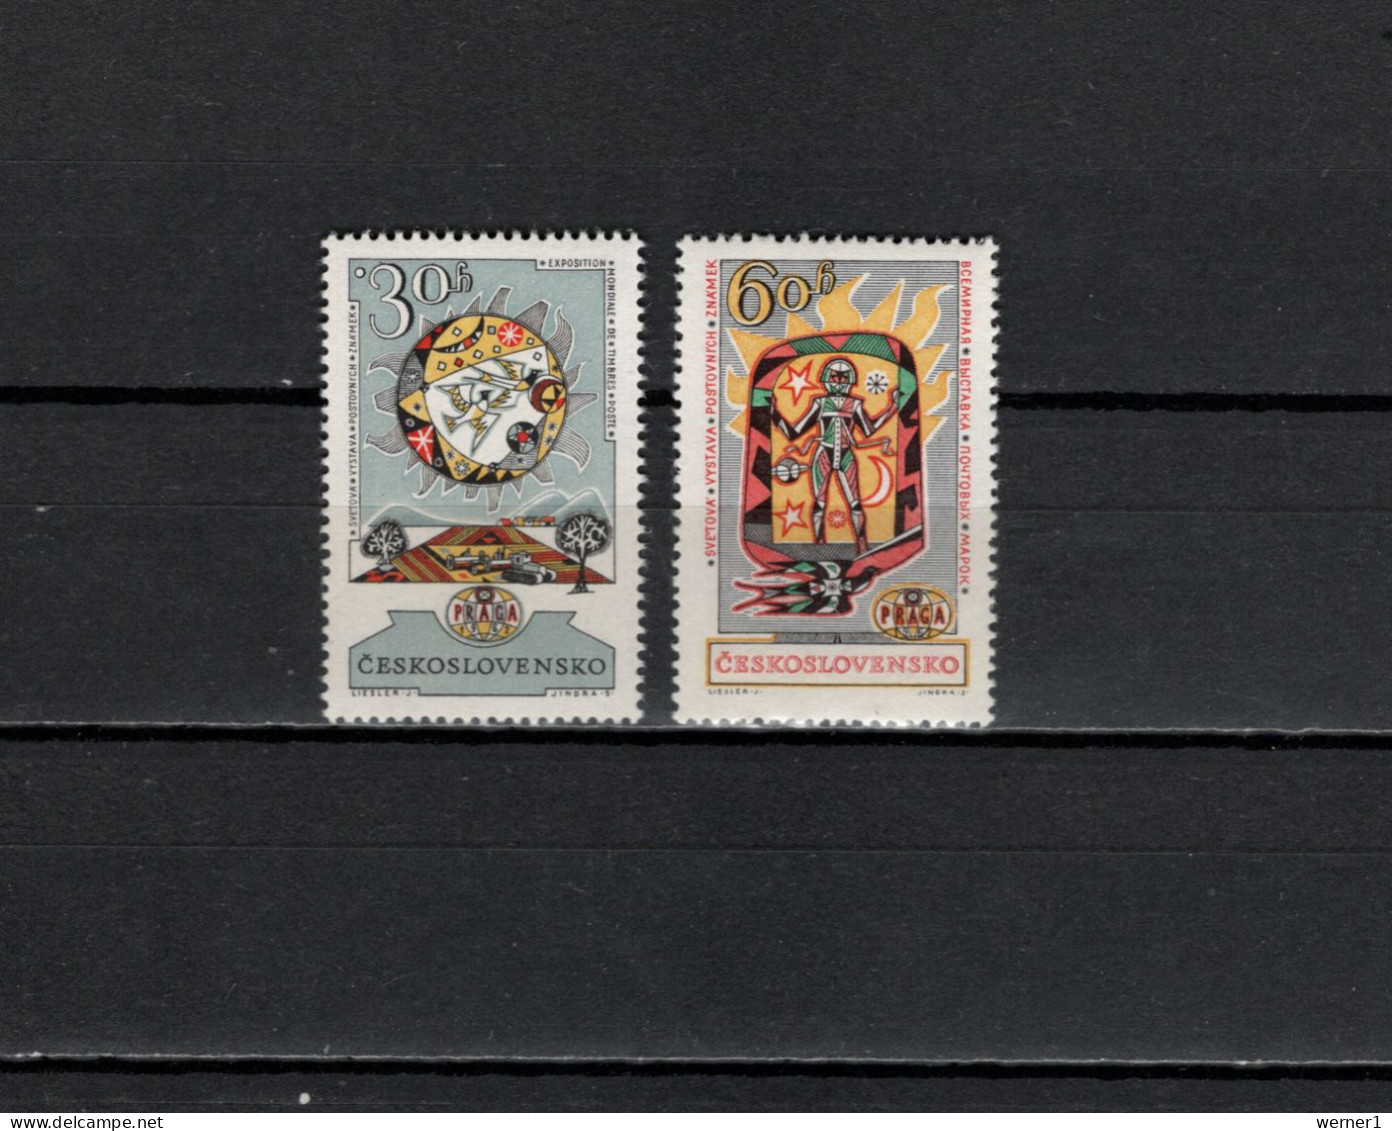 Czechoslovakia 1962 Space, Praga '62, 2 Stamps MNH - Europa